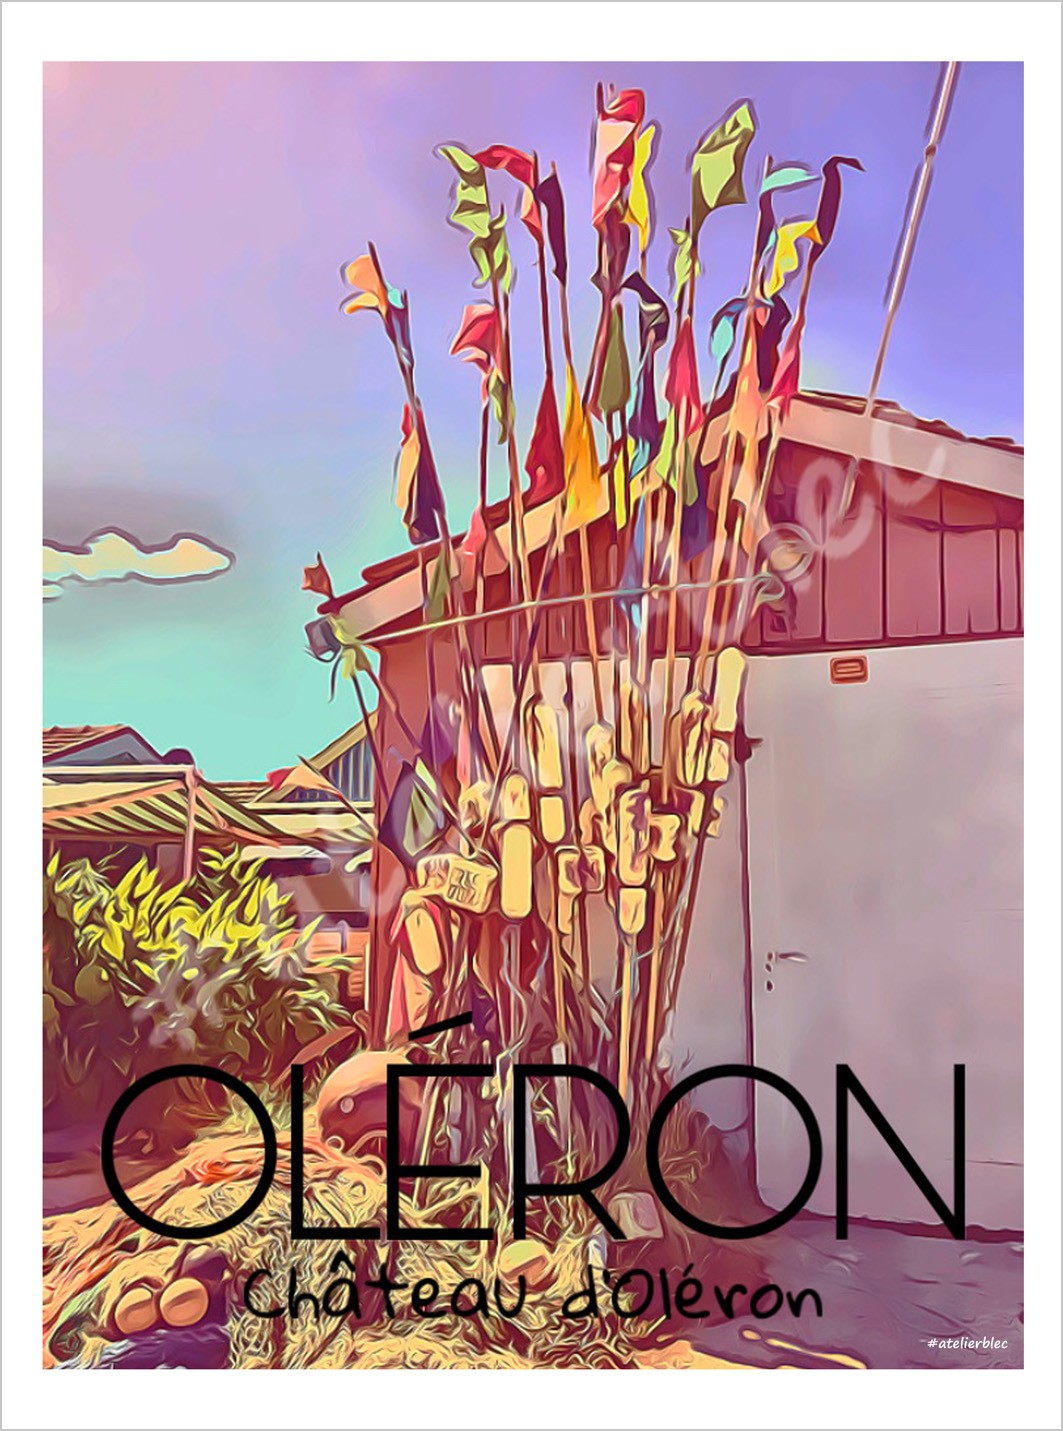 Affiche oleron8 chateau